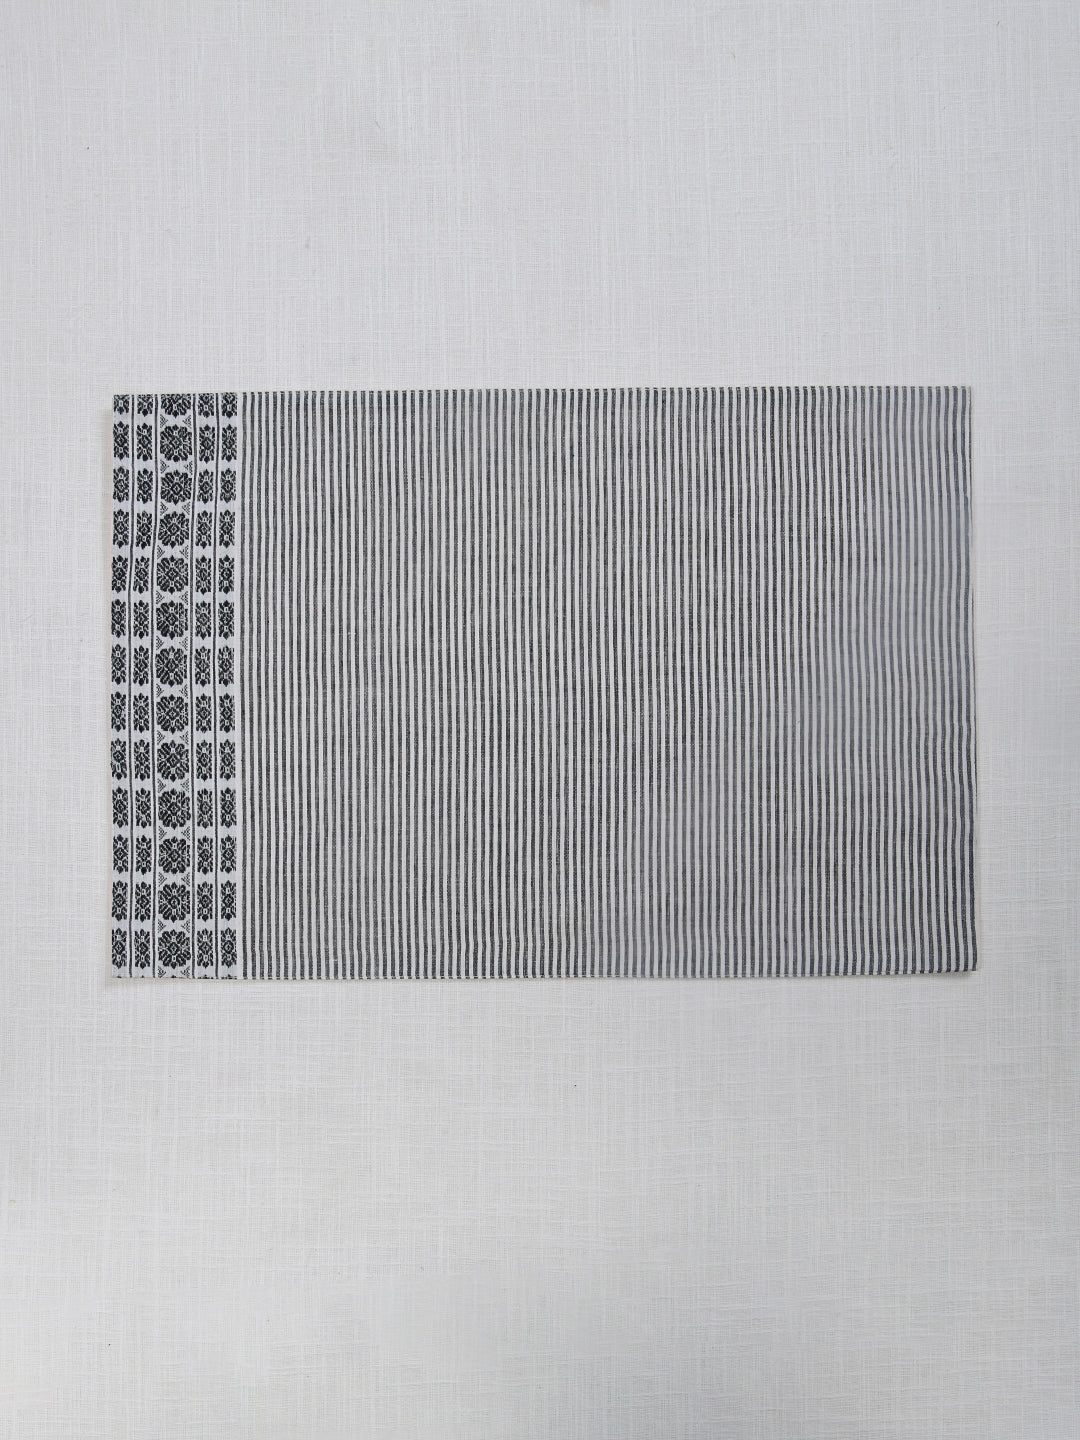 Black Cotton Stripe Printed 13x19 Inch Placemat Set of 4